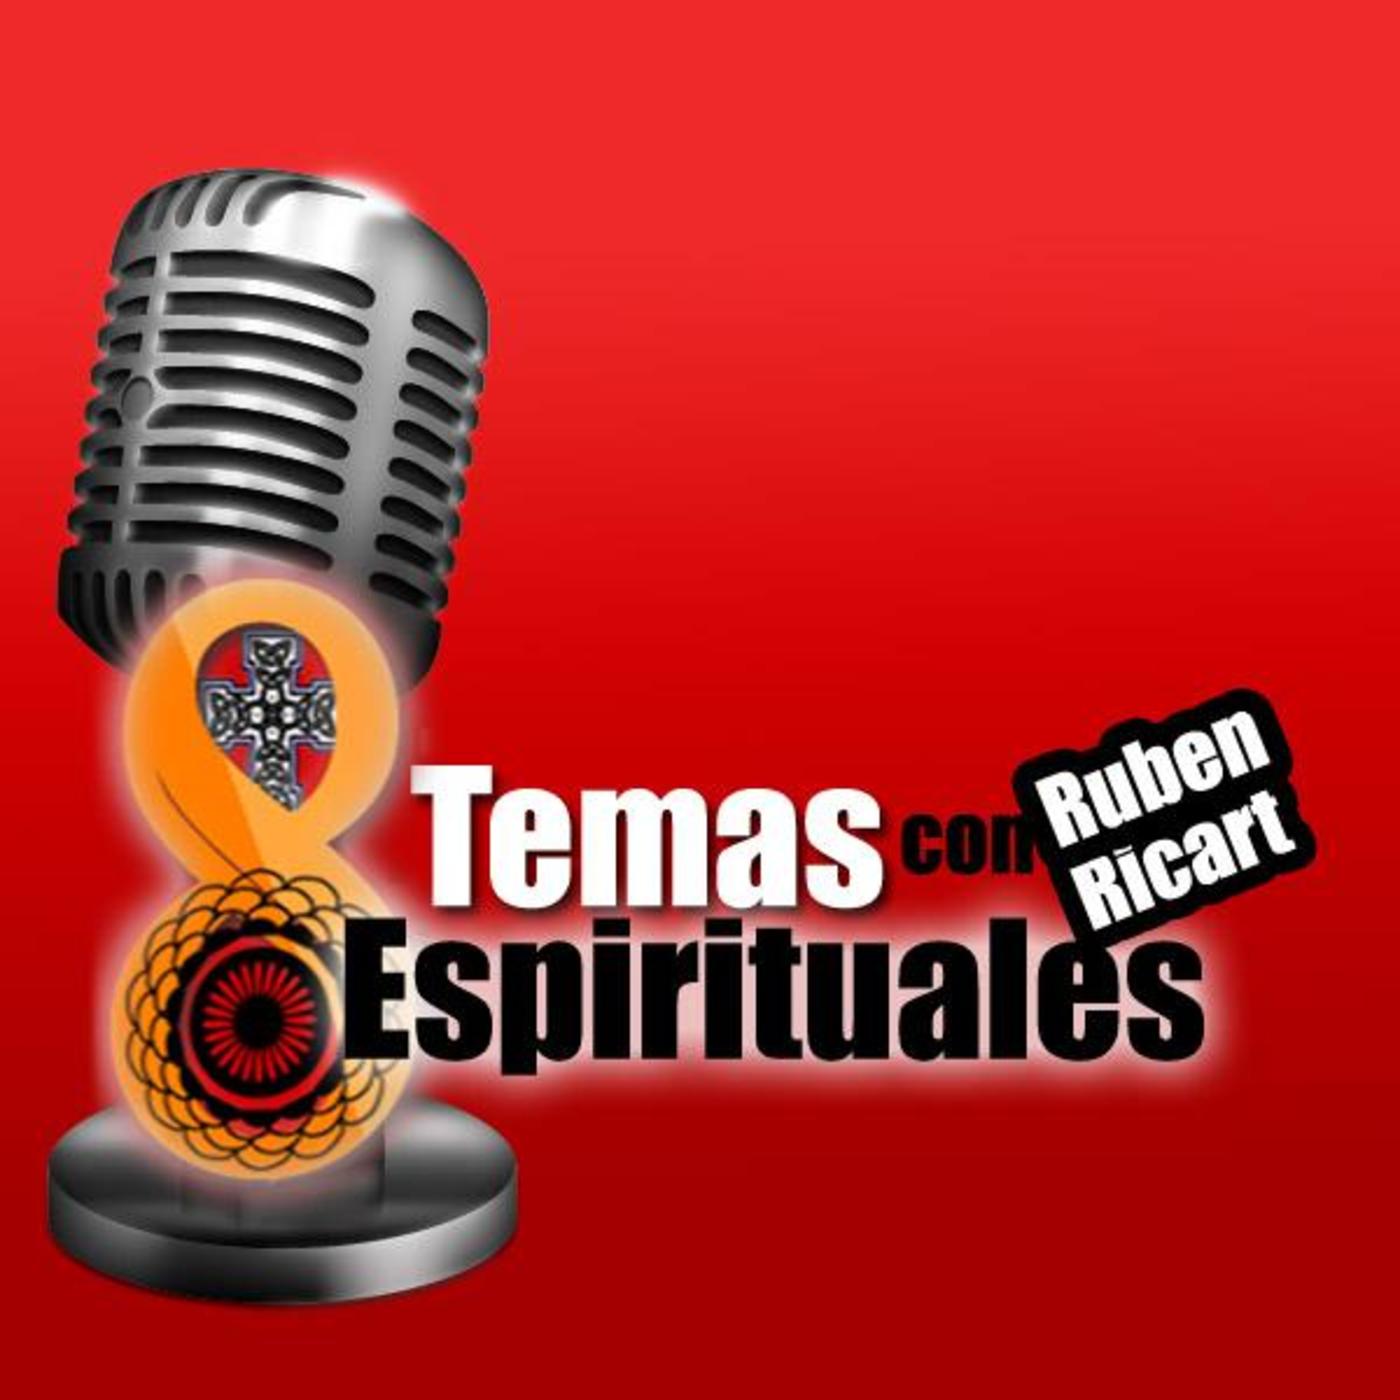 Temas Espirituales Online Radio by Ruben Ricart | BlogTalkRadio